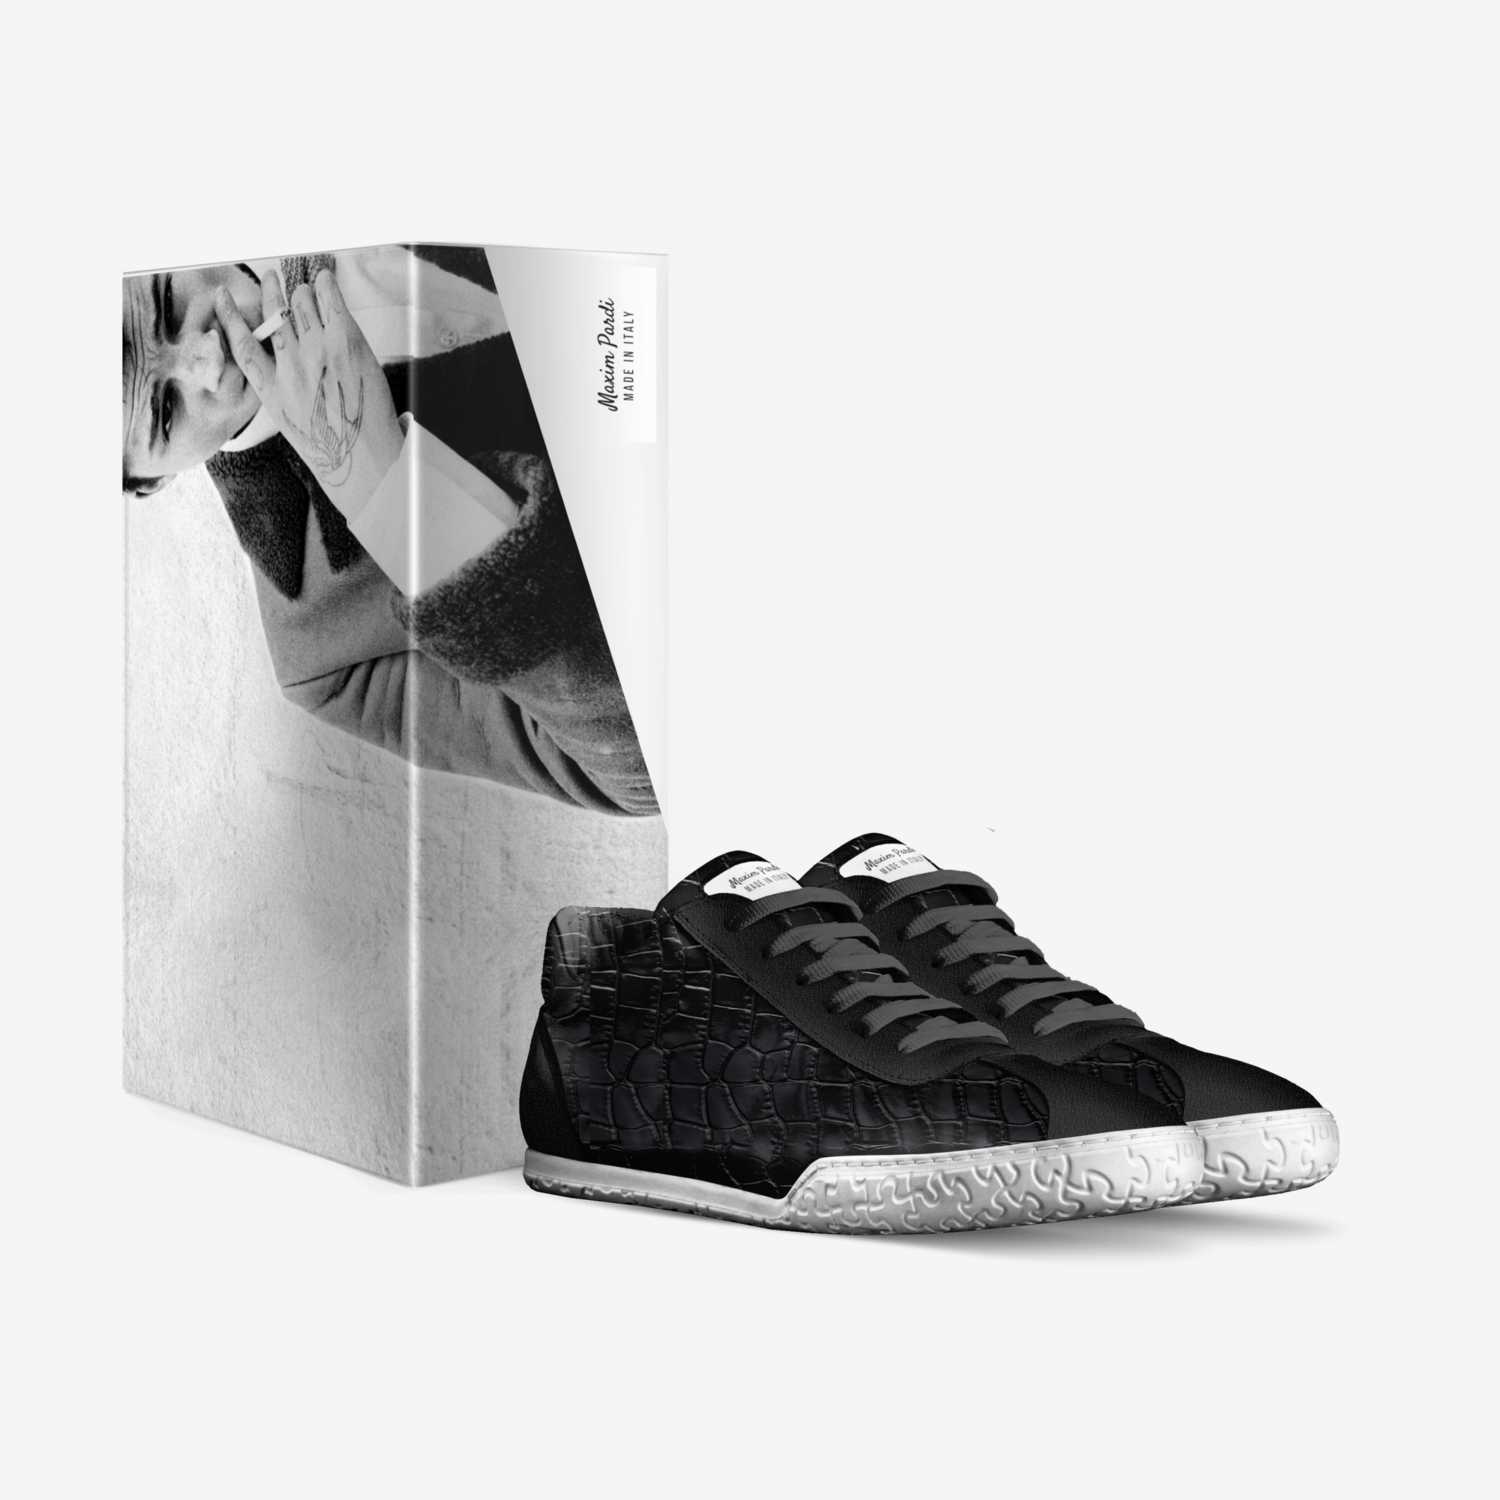 Maxim Pardi custom made in Italy shoes by Maxim Pardi | Box view